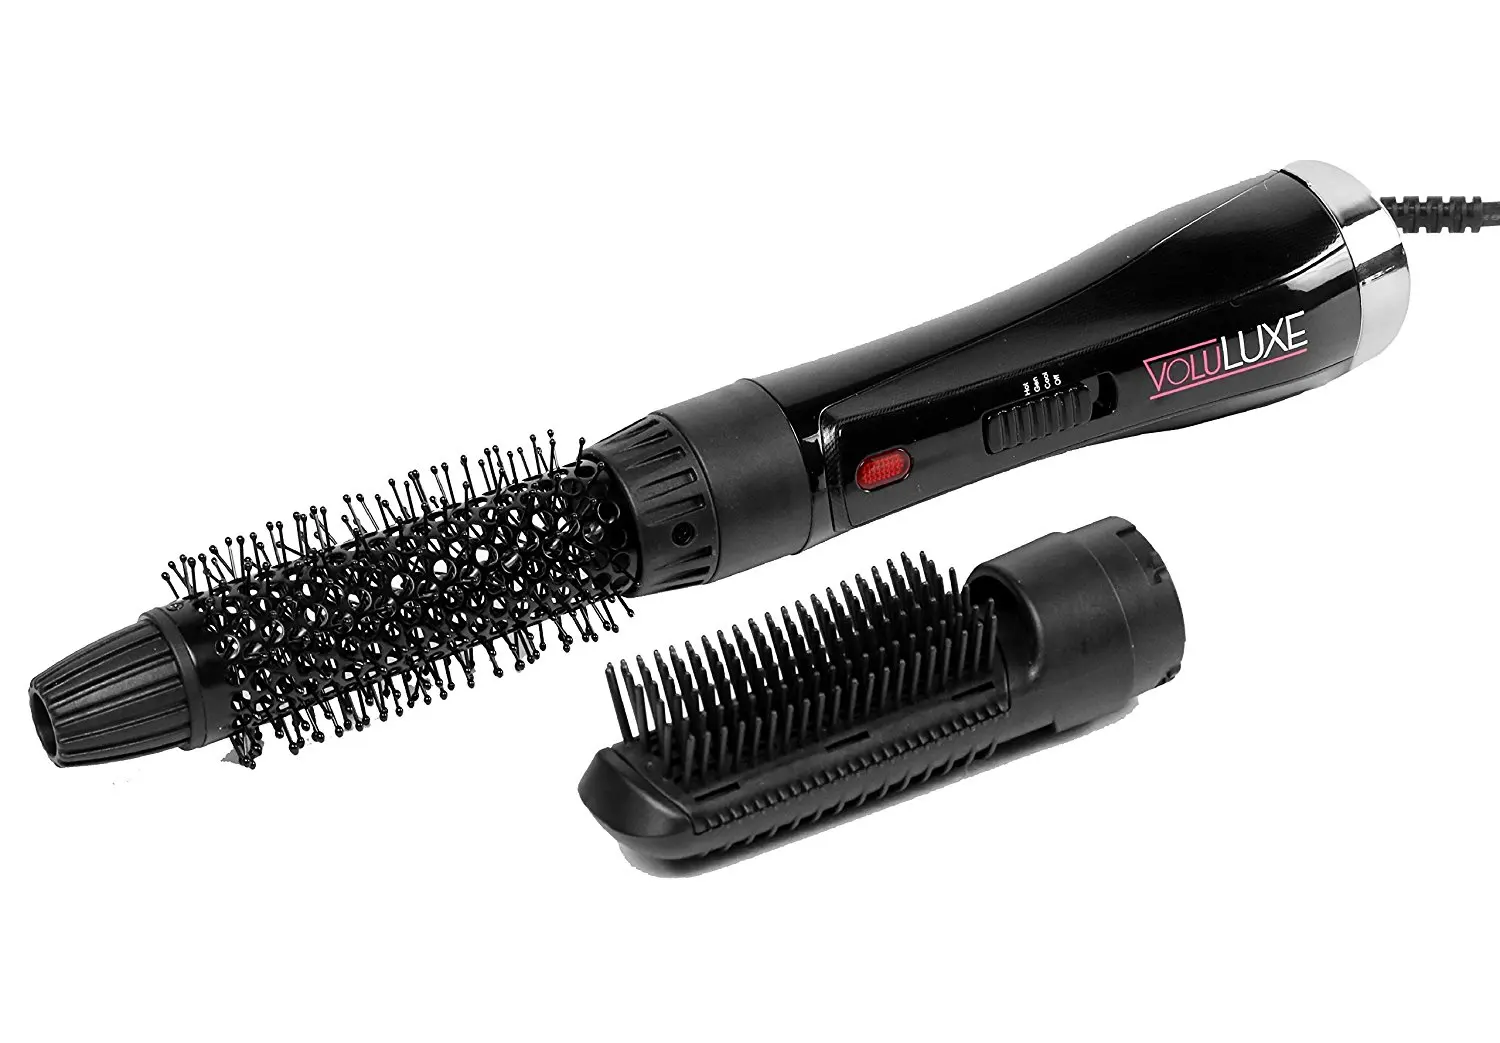 Cheap Volumizer Hair Brush Find Volumizer Hair Brush Deals On Line At Alibaba Com